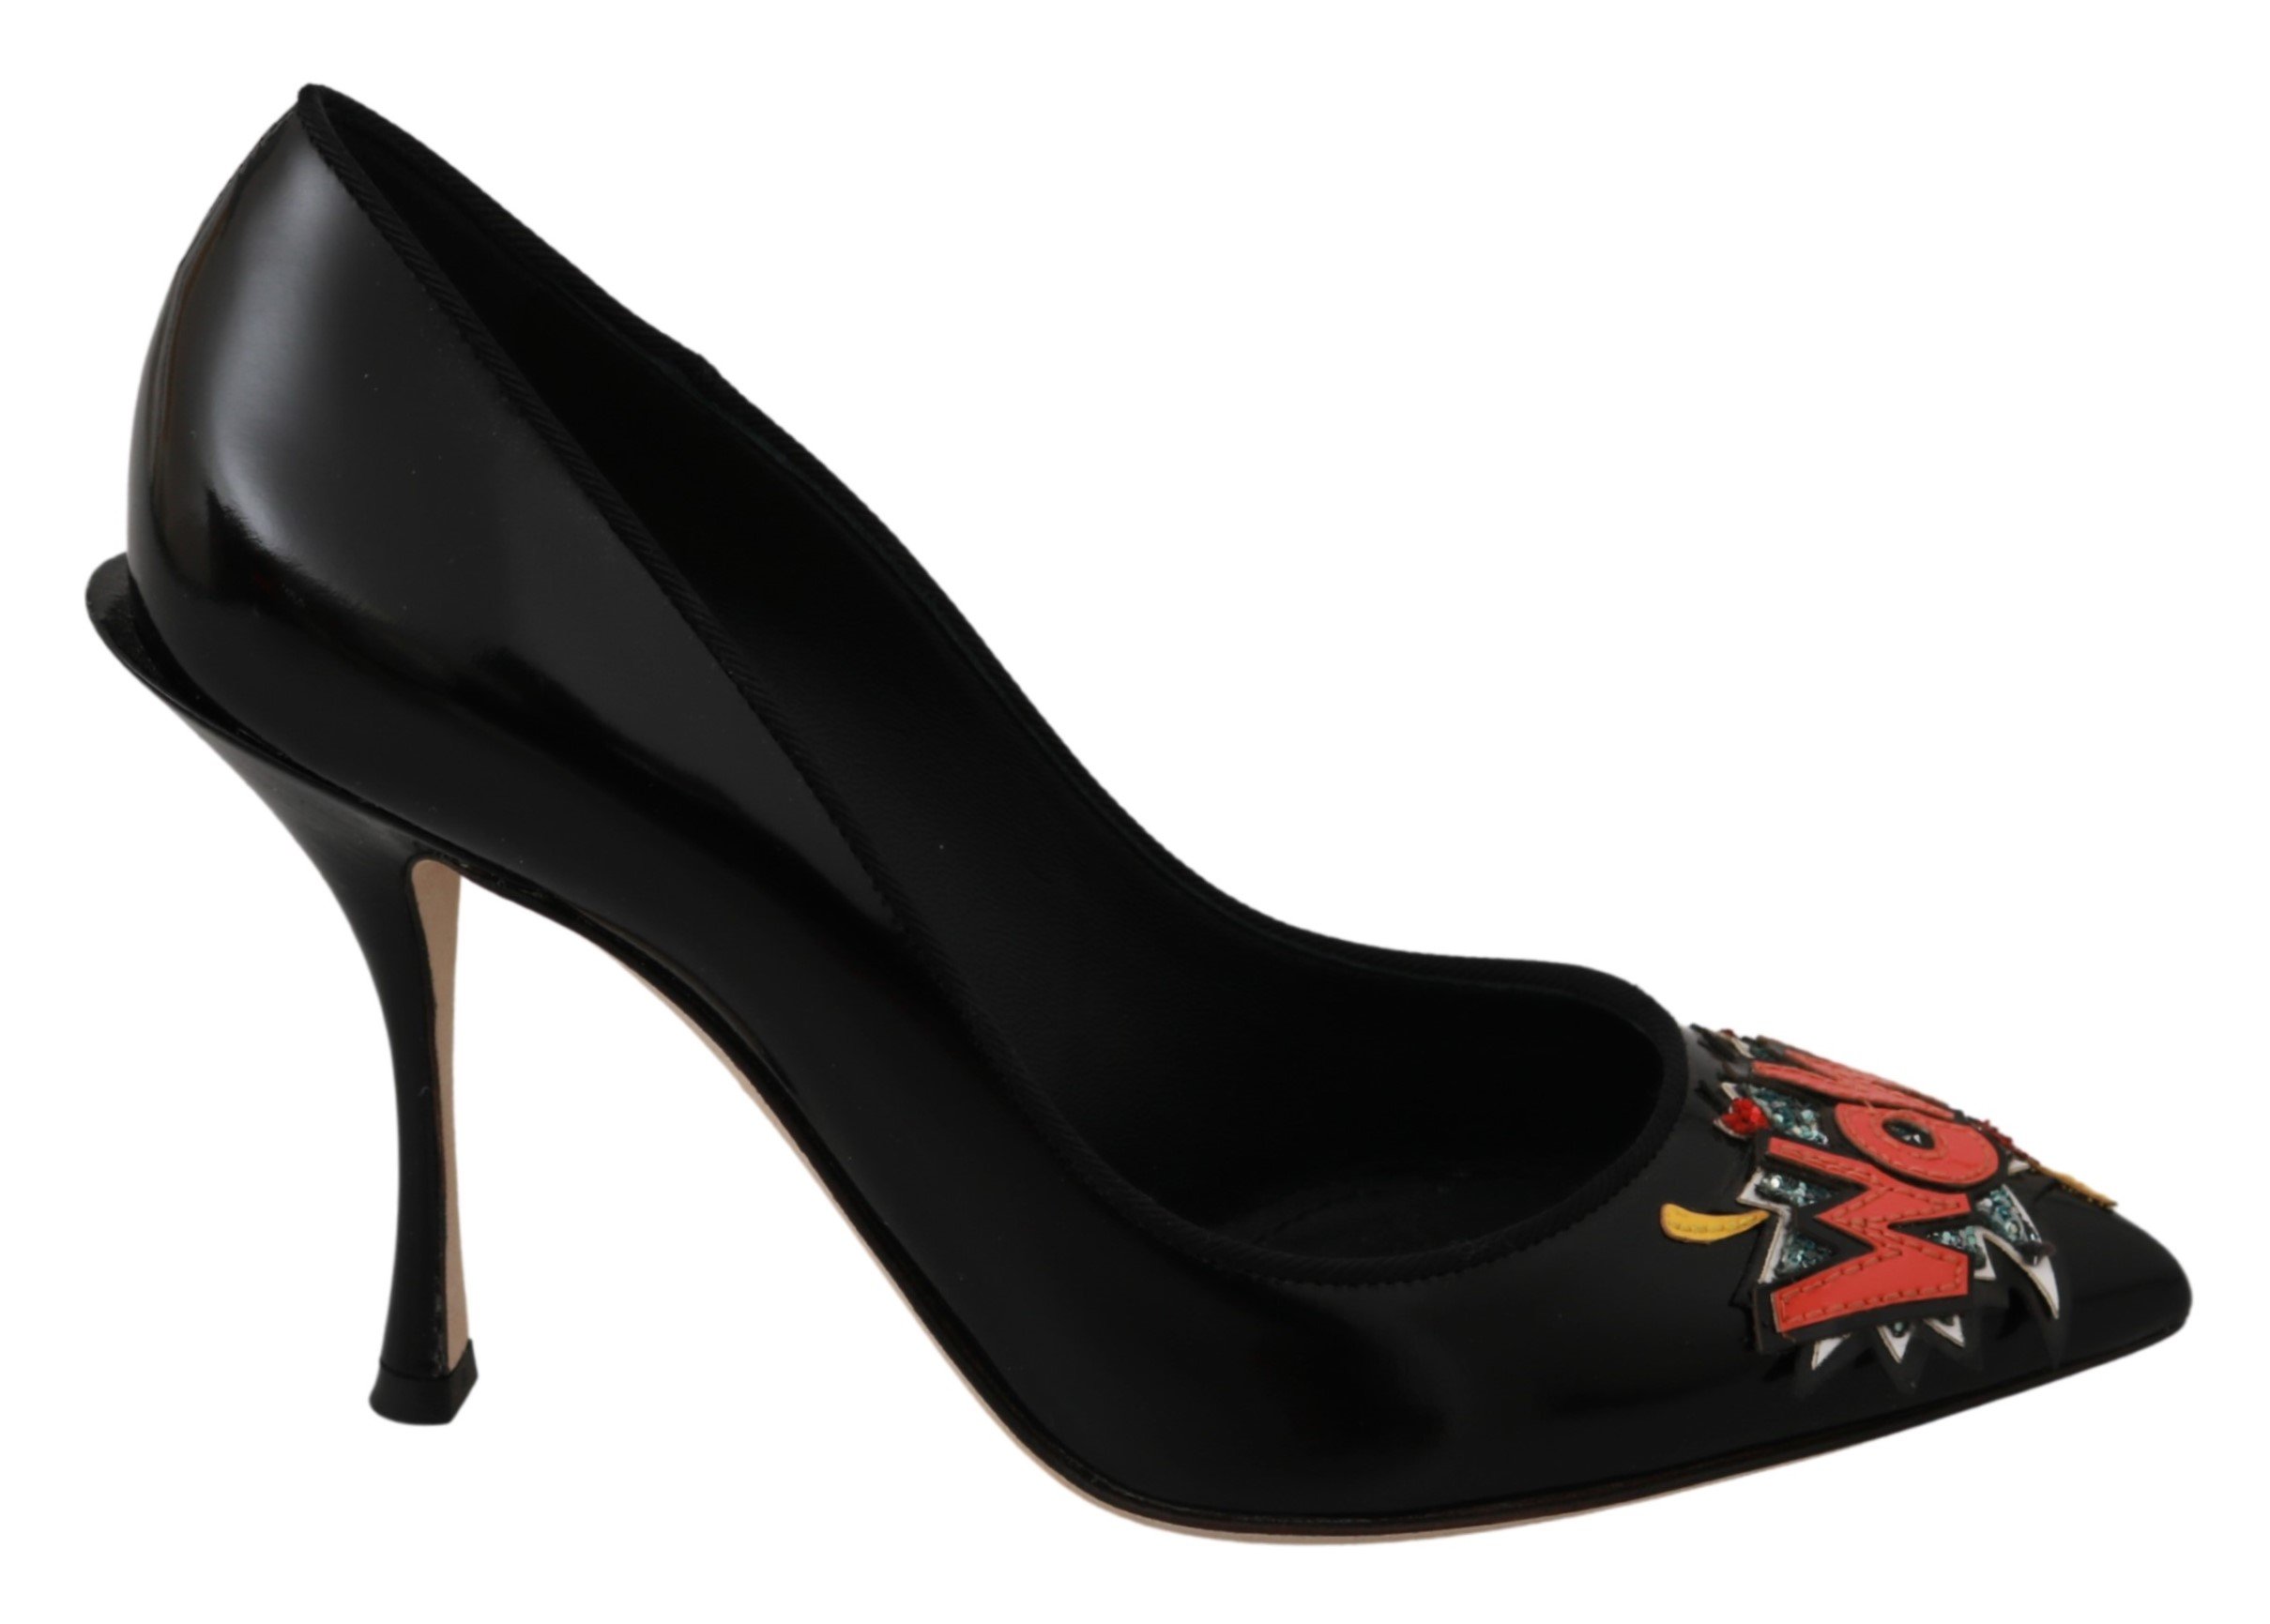 Dolce & Gabbana Women's Leather Pumps Shoe Black LA6459 - EU35/US4.5